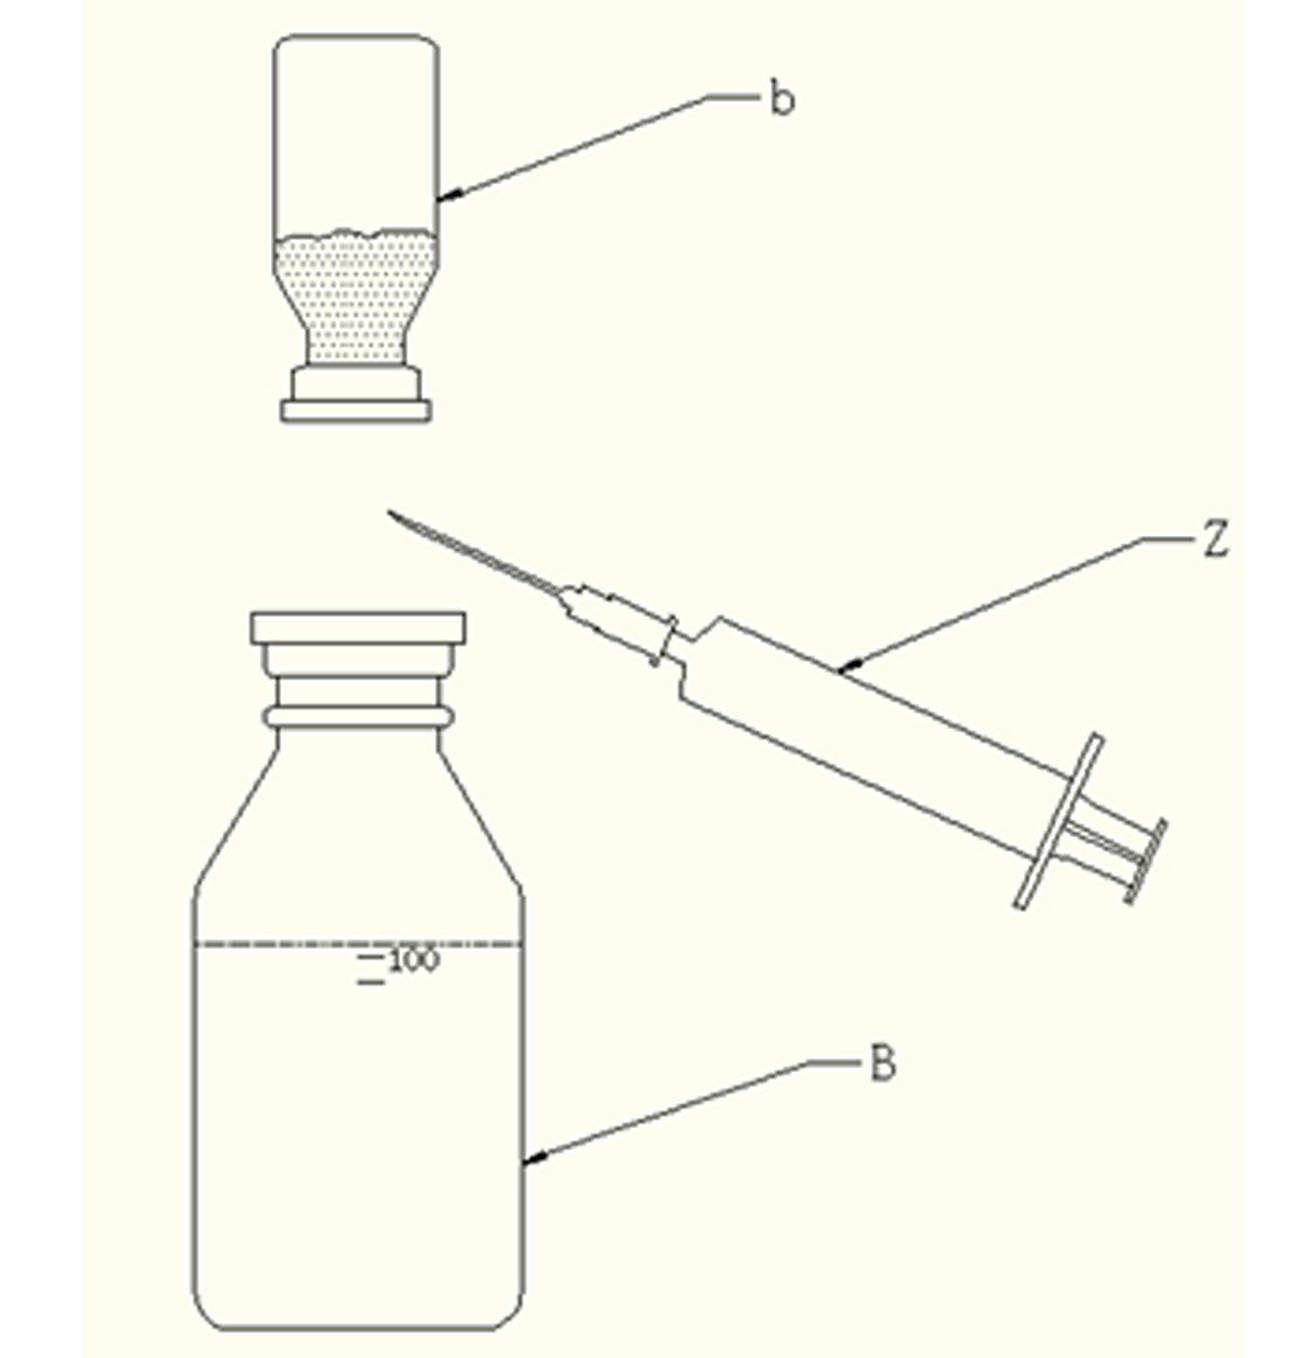 Simple single-passage dosage process and dosage apparatus utilizing same